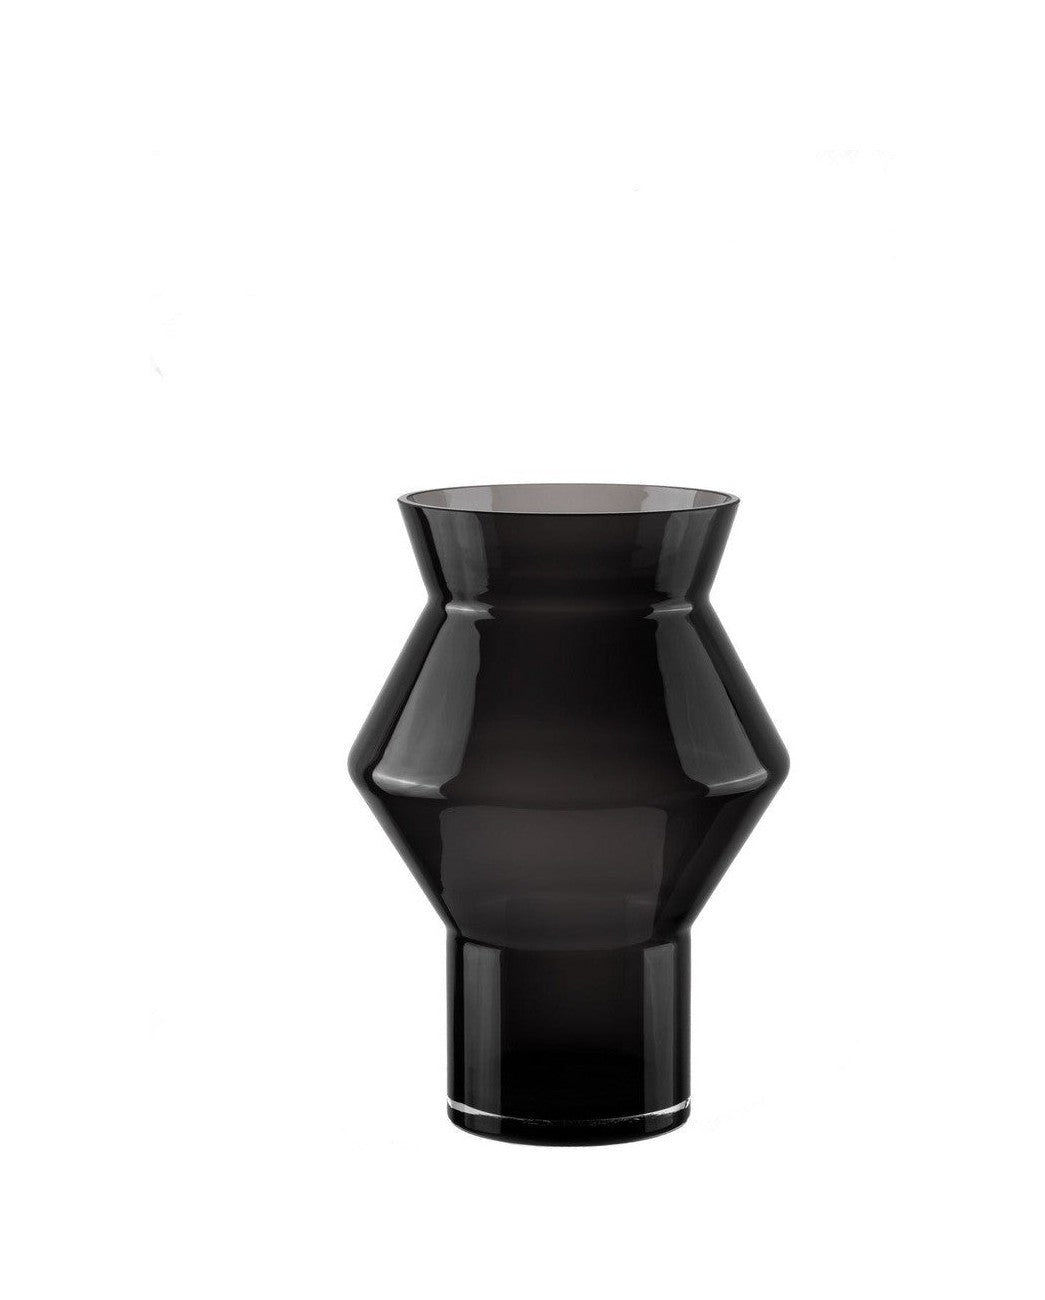 Large design vase with jaggy angular cylindrical shape, dark gray high